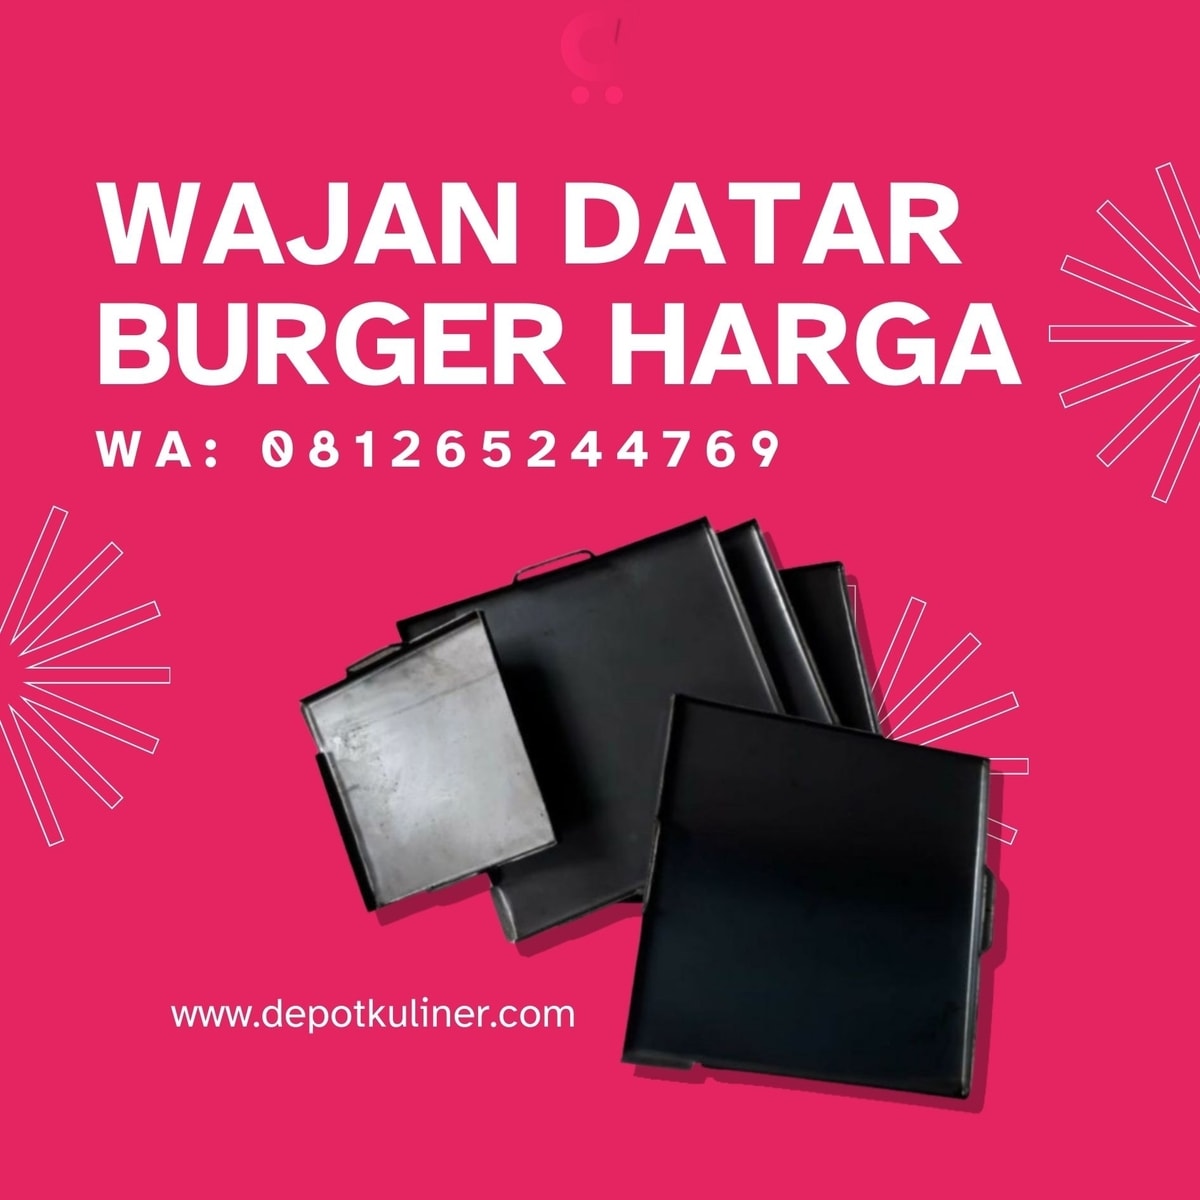 Wajan Datar Burger Harga HARGA TERBAIK, (0812-6524-4769)